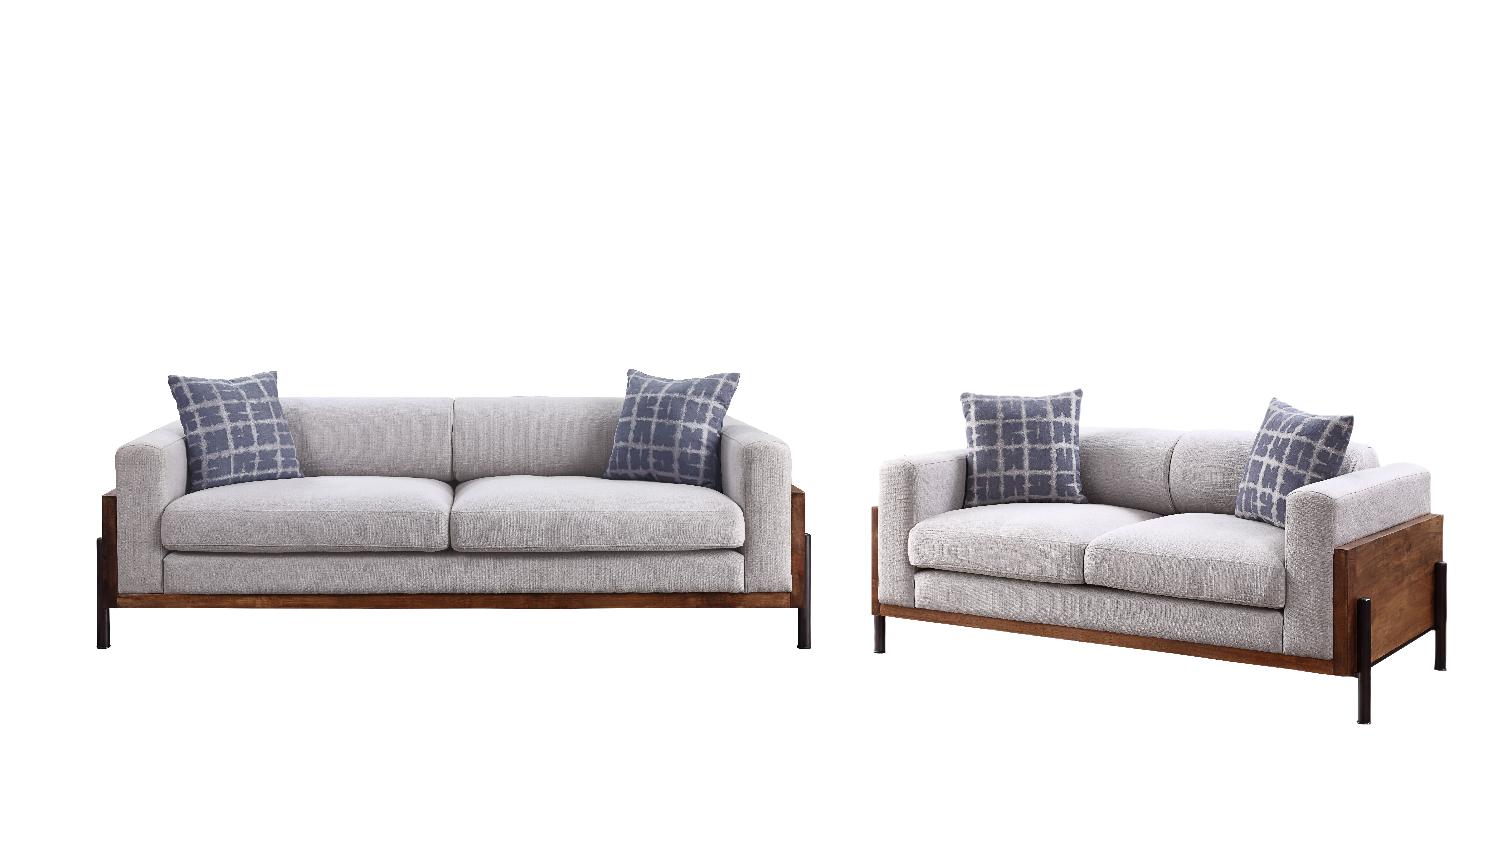 Modern Sofa and Loveseat Set Pelton 54890-2pcs in Light Gray Fabric